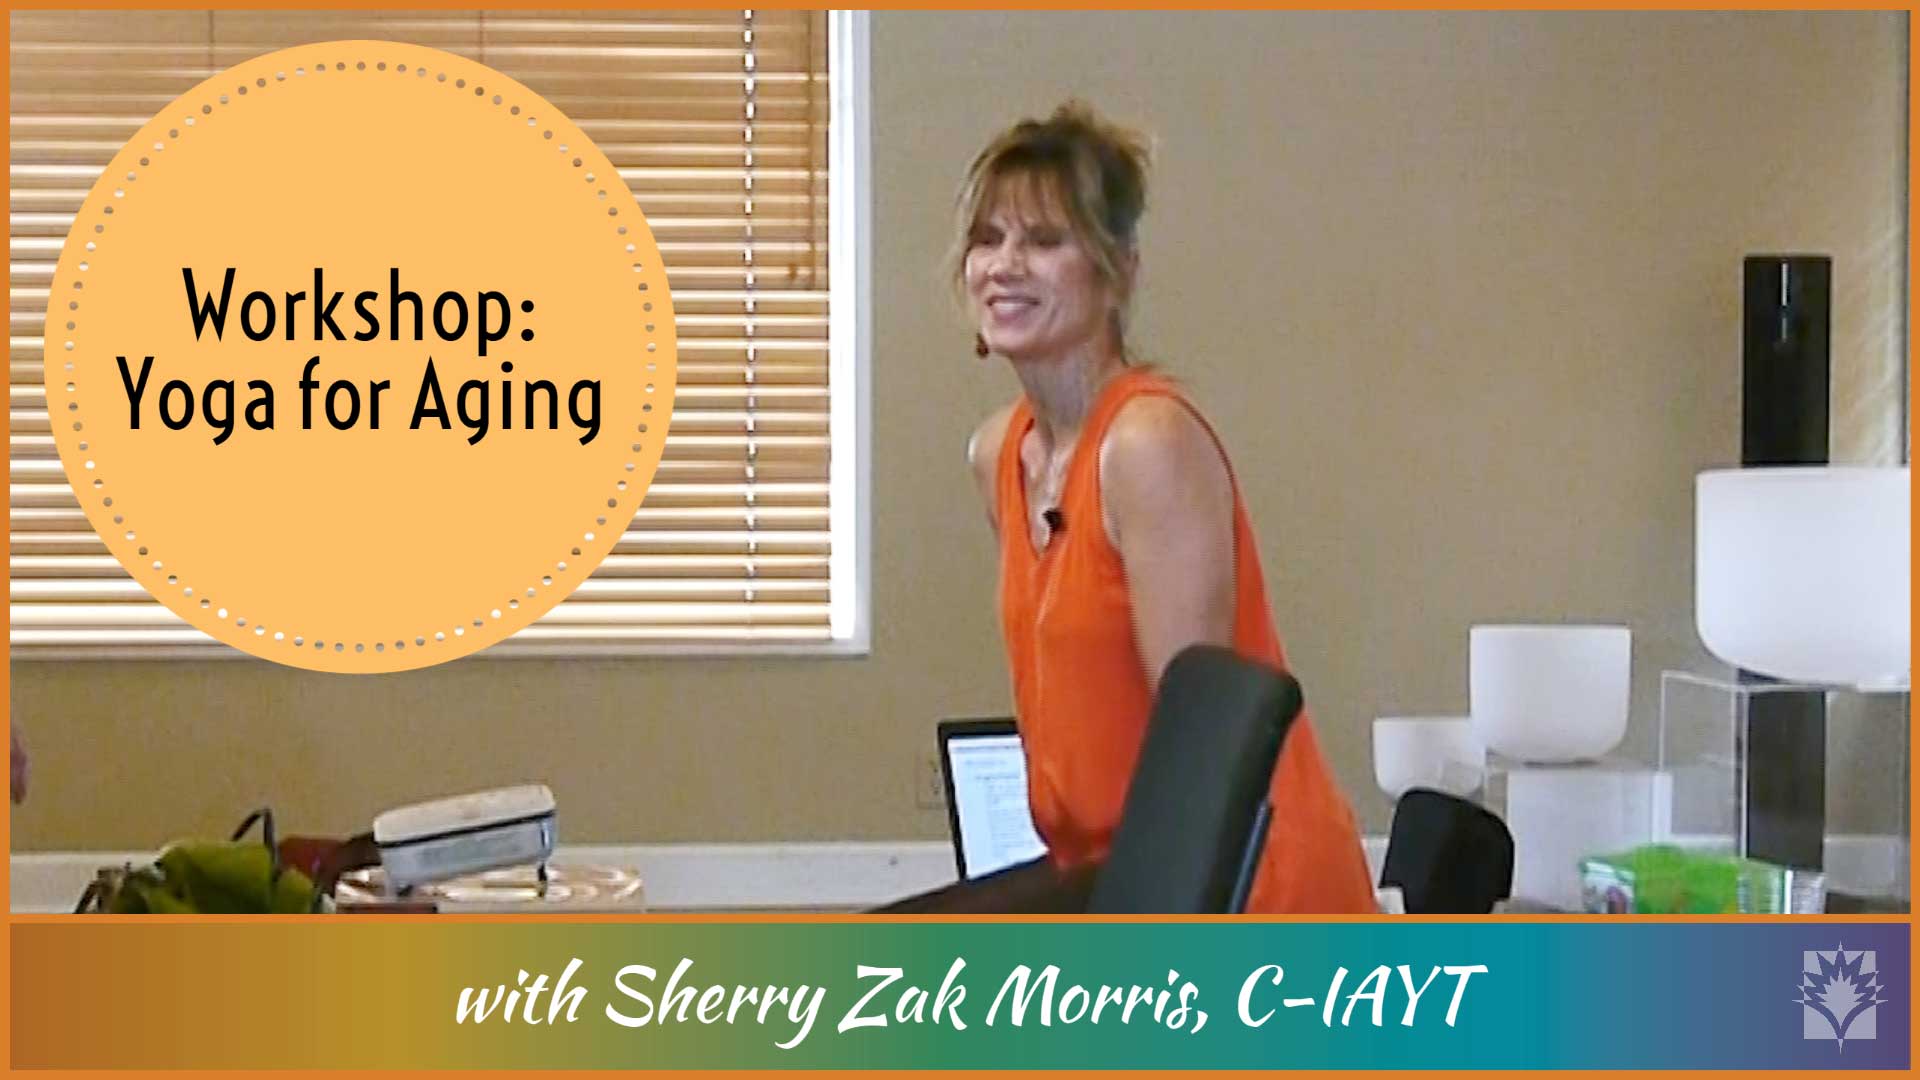 Sherry Zak Morris Workshop: Yoga for Aging